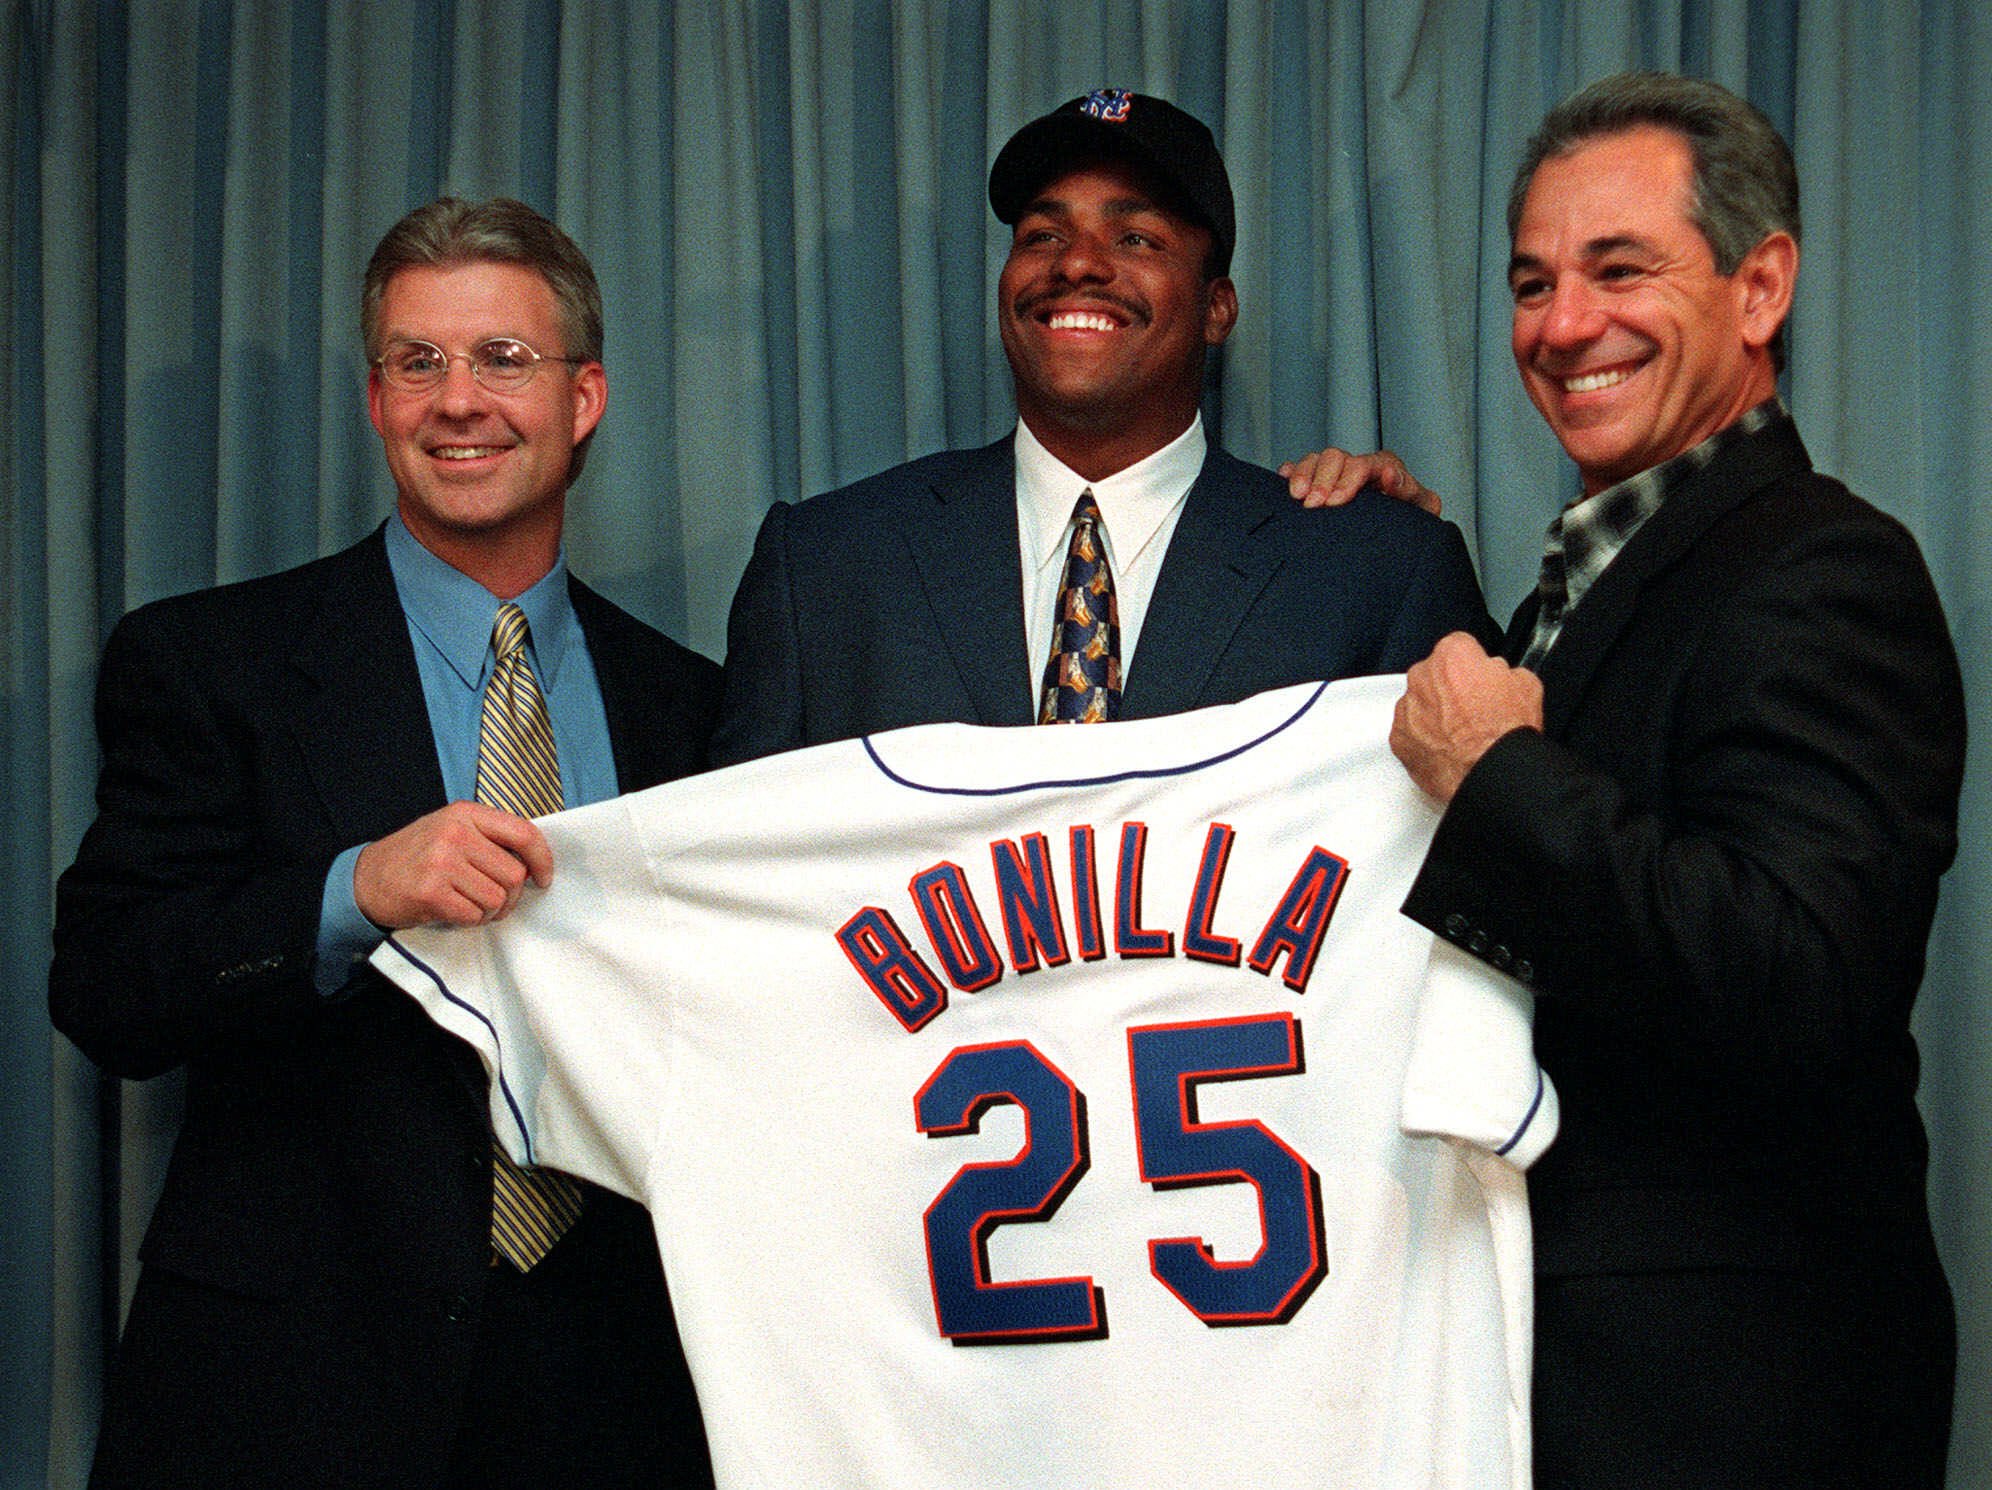 Bobby Bonilla Day' Shows New York Mets' History of Futility